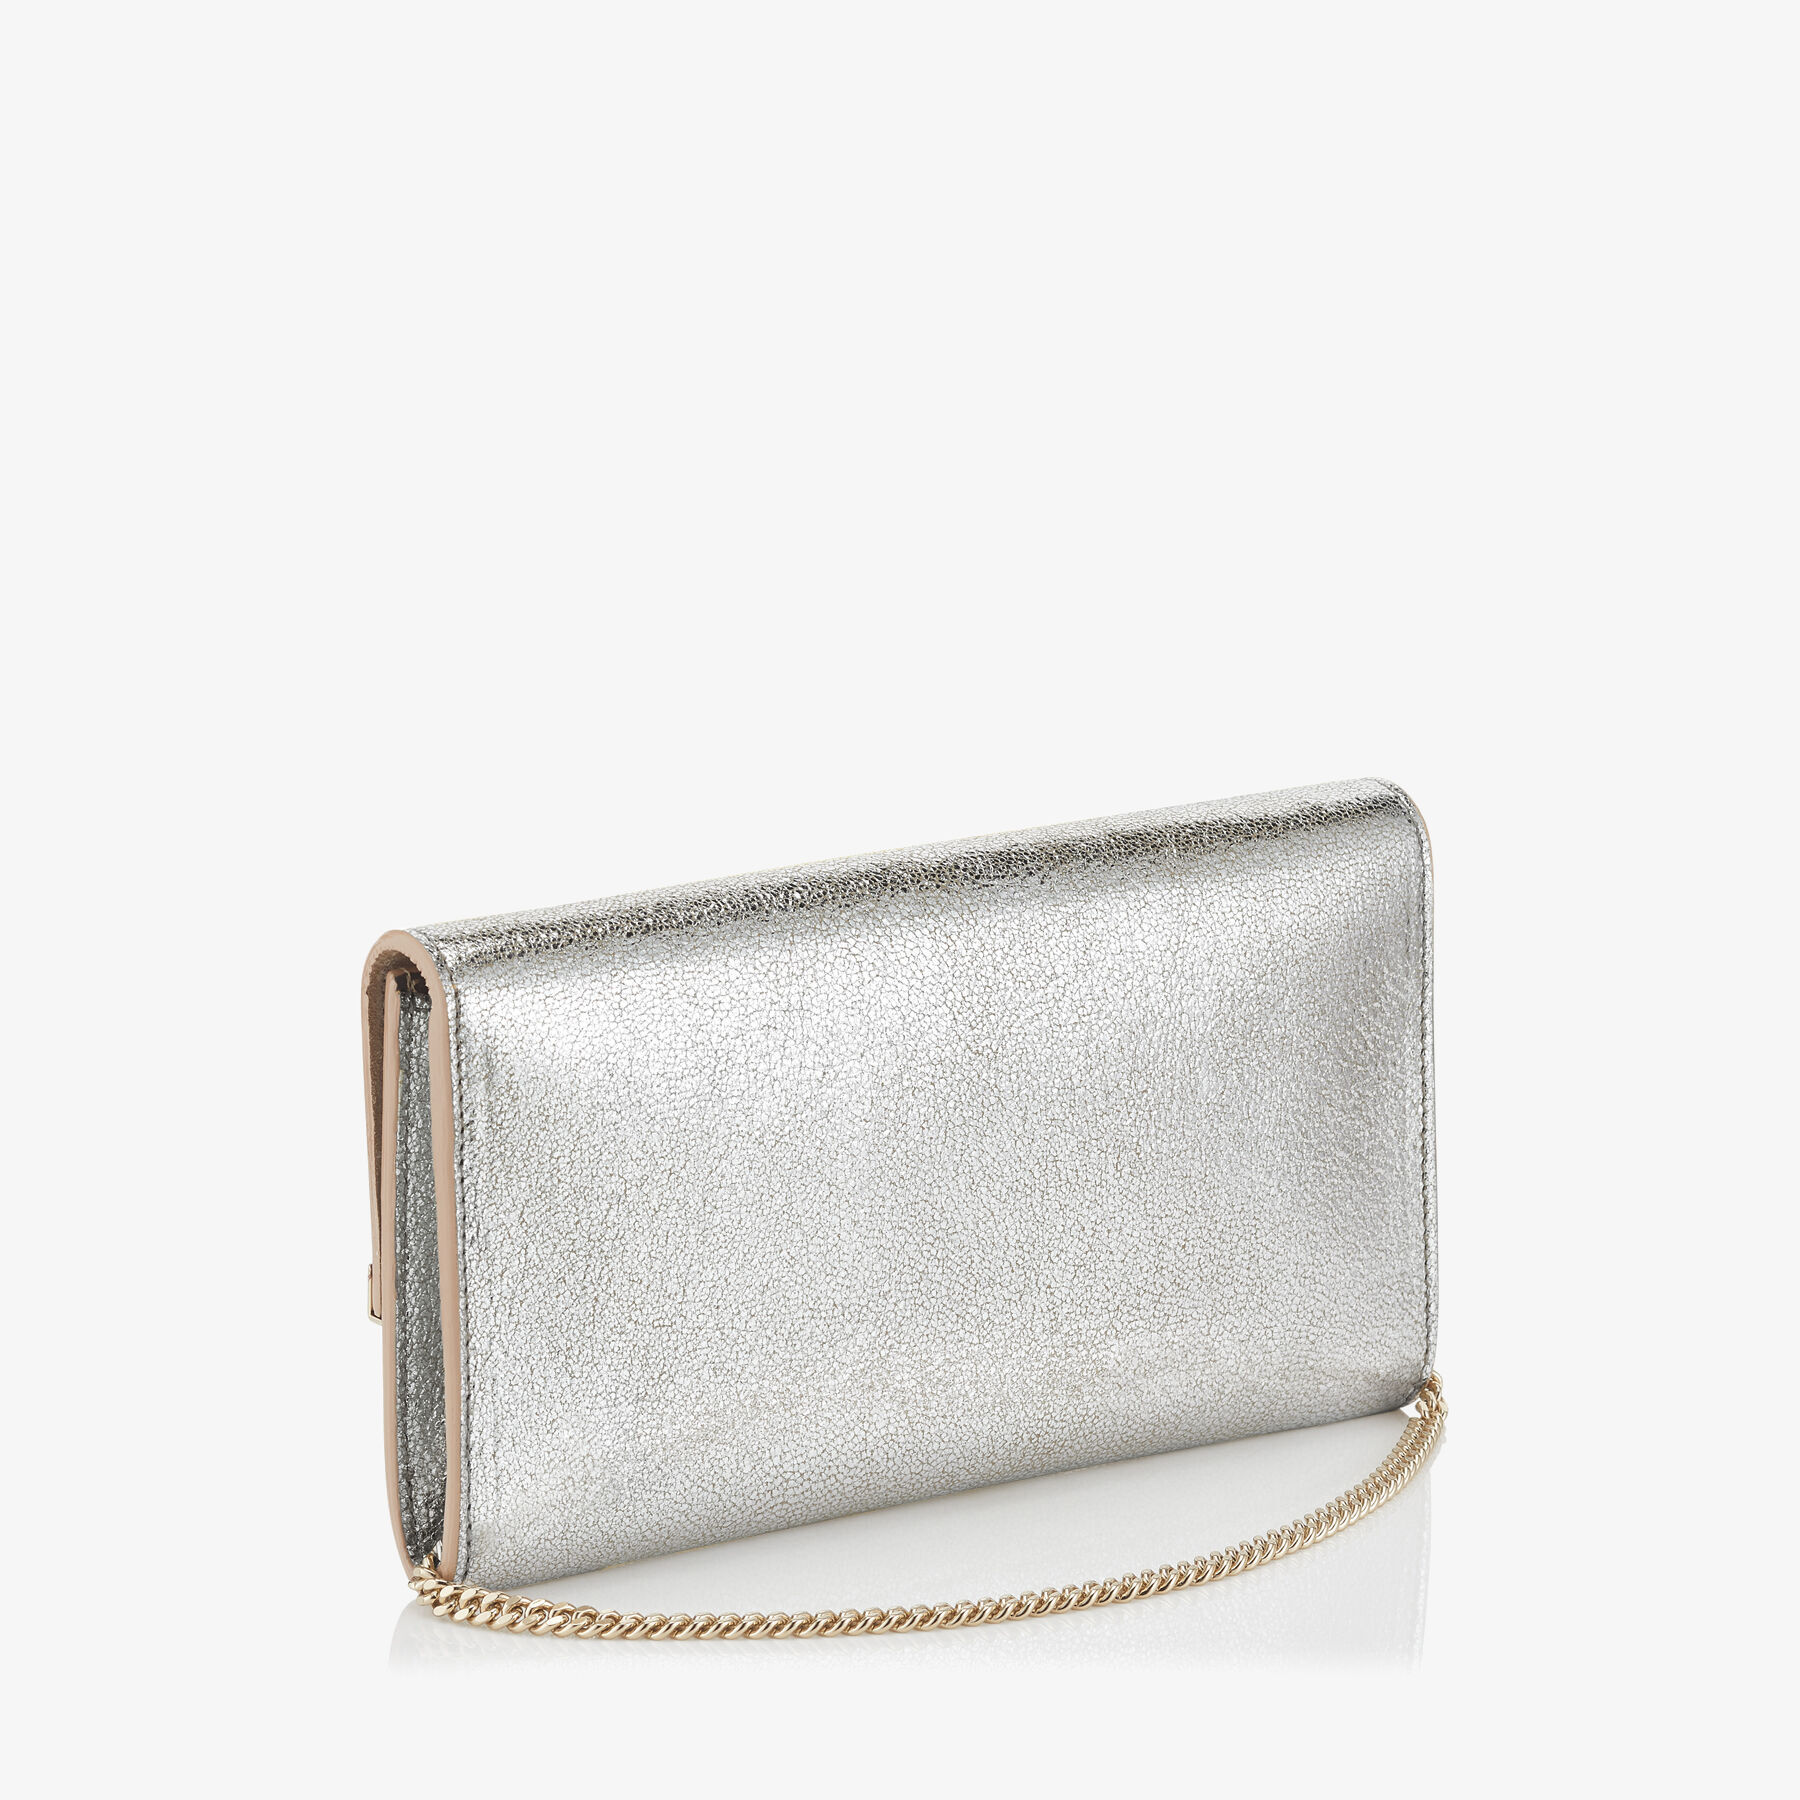 Champagne Glitter Leather Clutch Bag | Emmie | Pre Fall 18 | JIMMY 